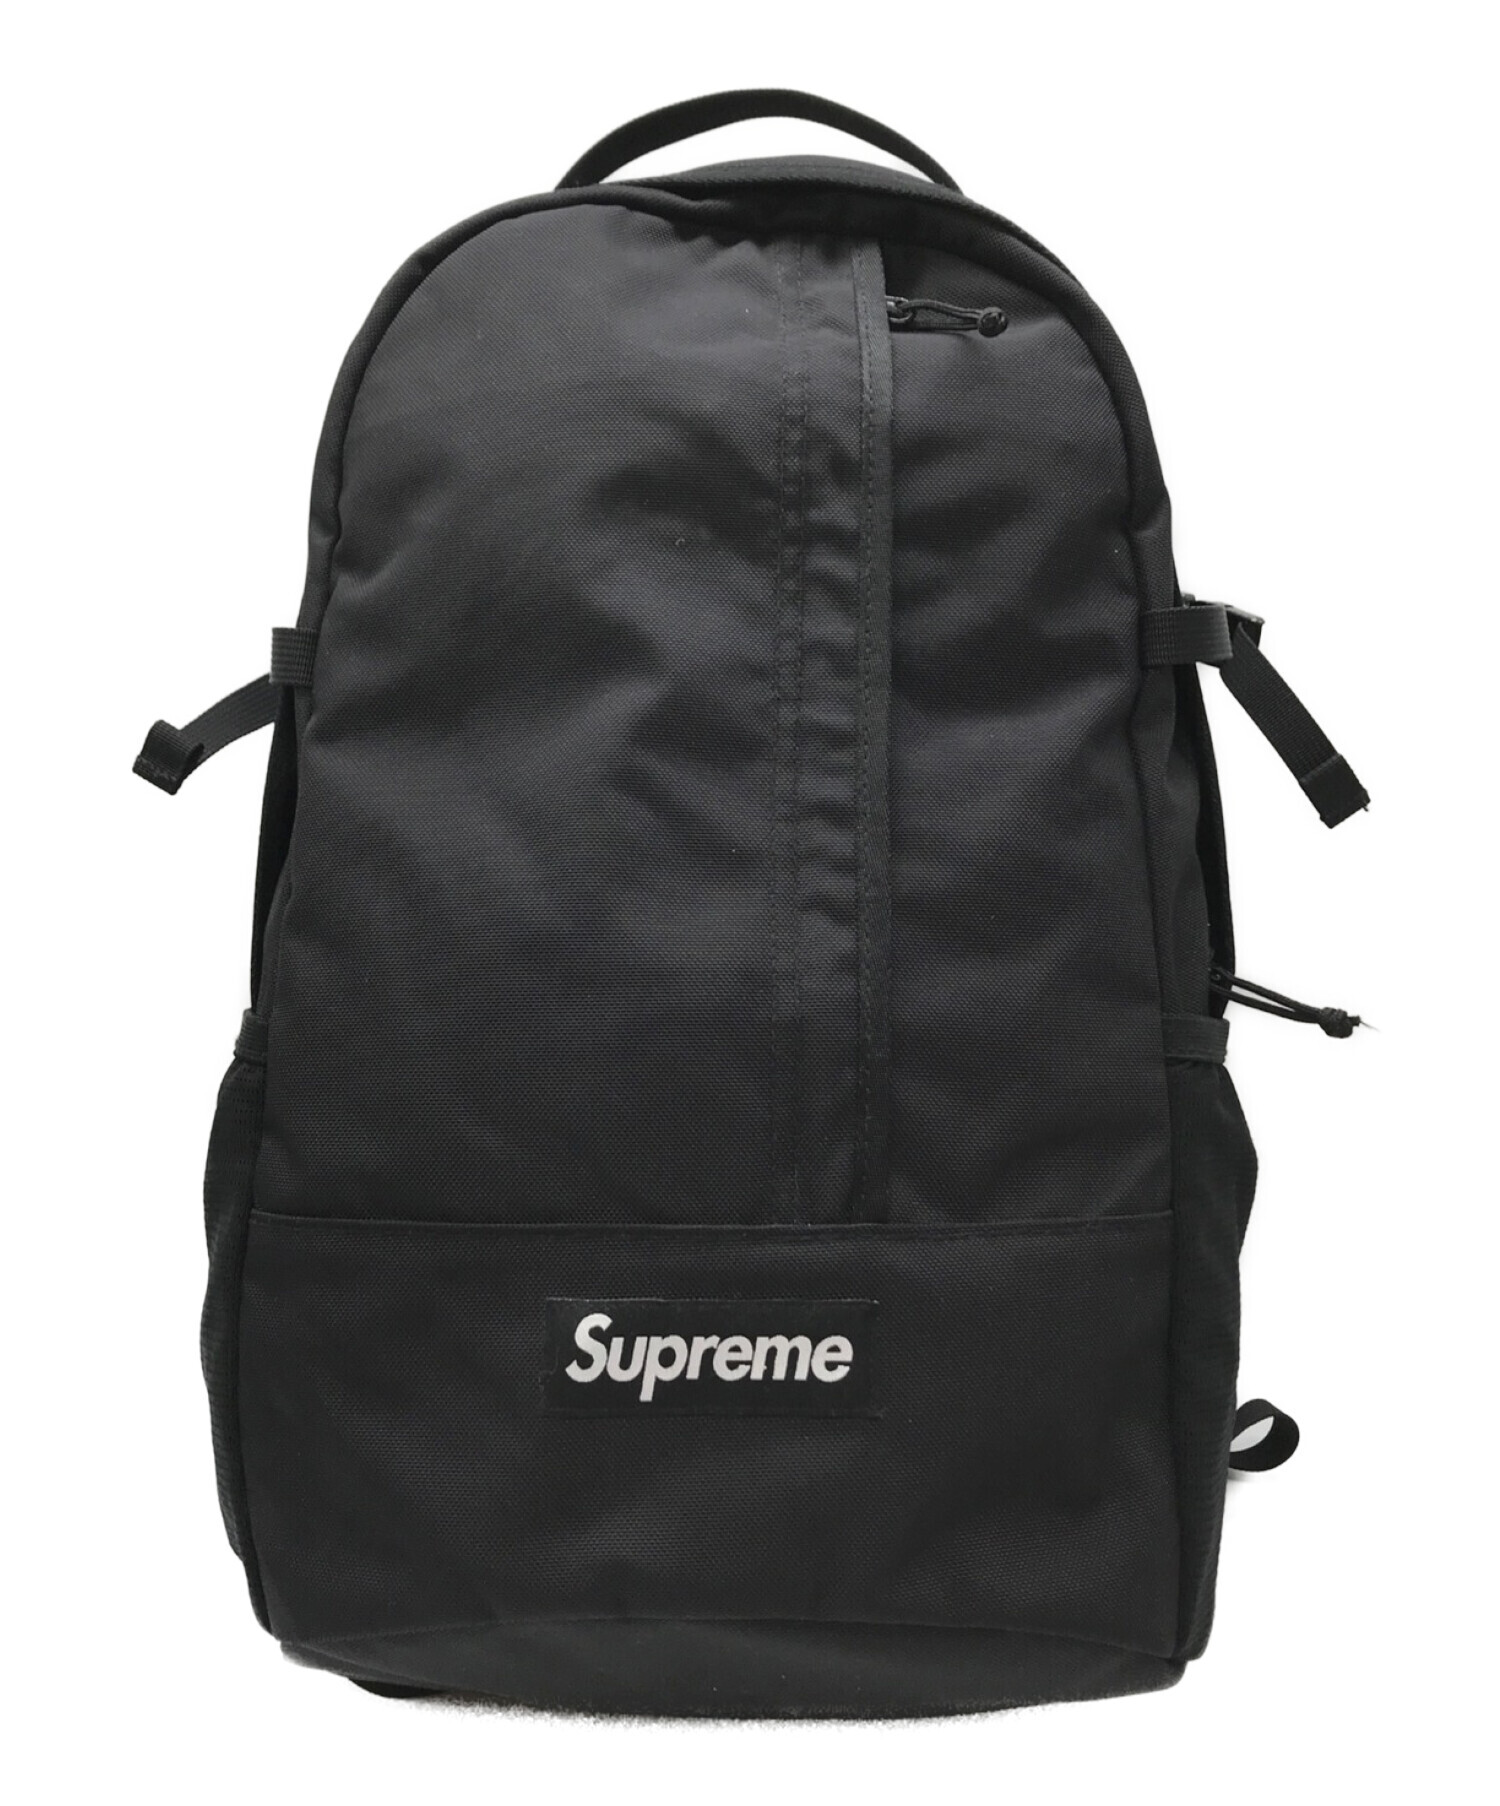 Supreme 18ss backpack バックパック